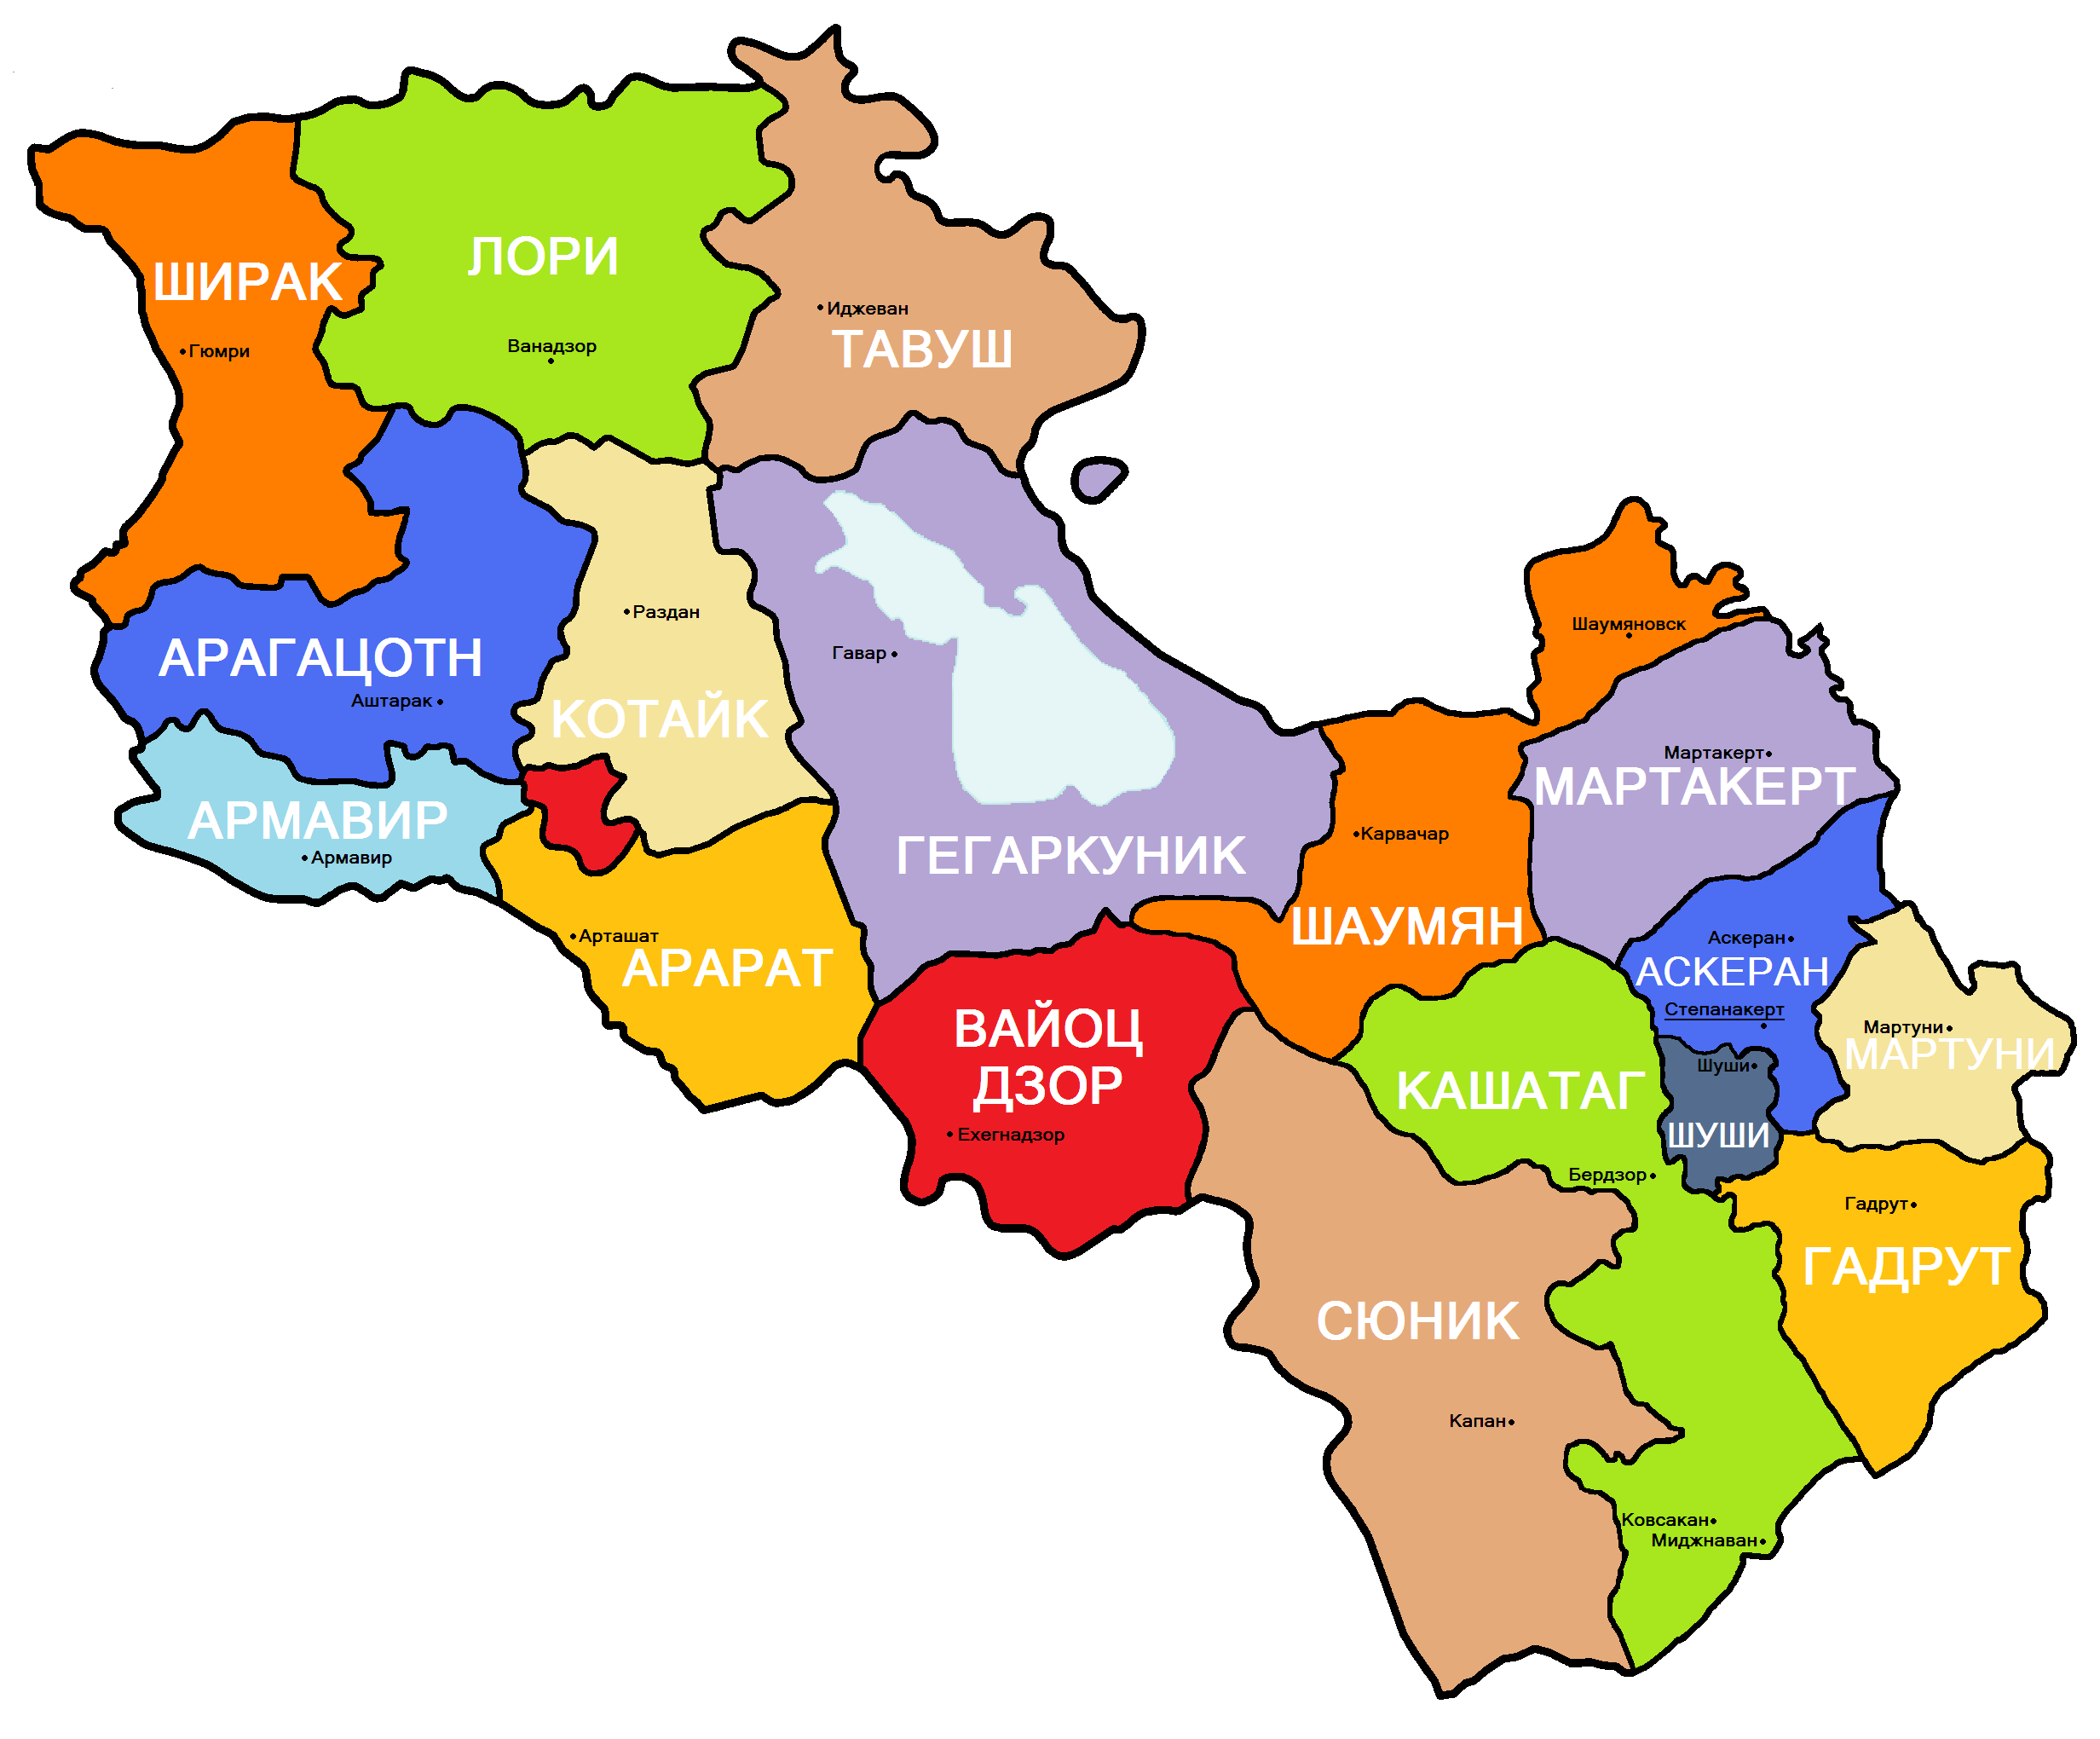 http://nagornykarabakh.files.wordpress.com/2012/08/armenia-karabakh25.gif